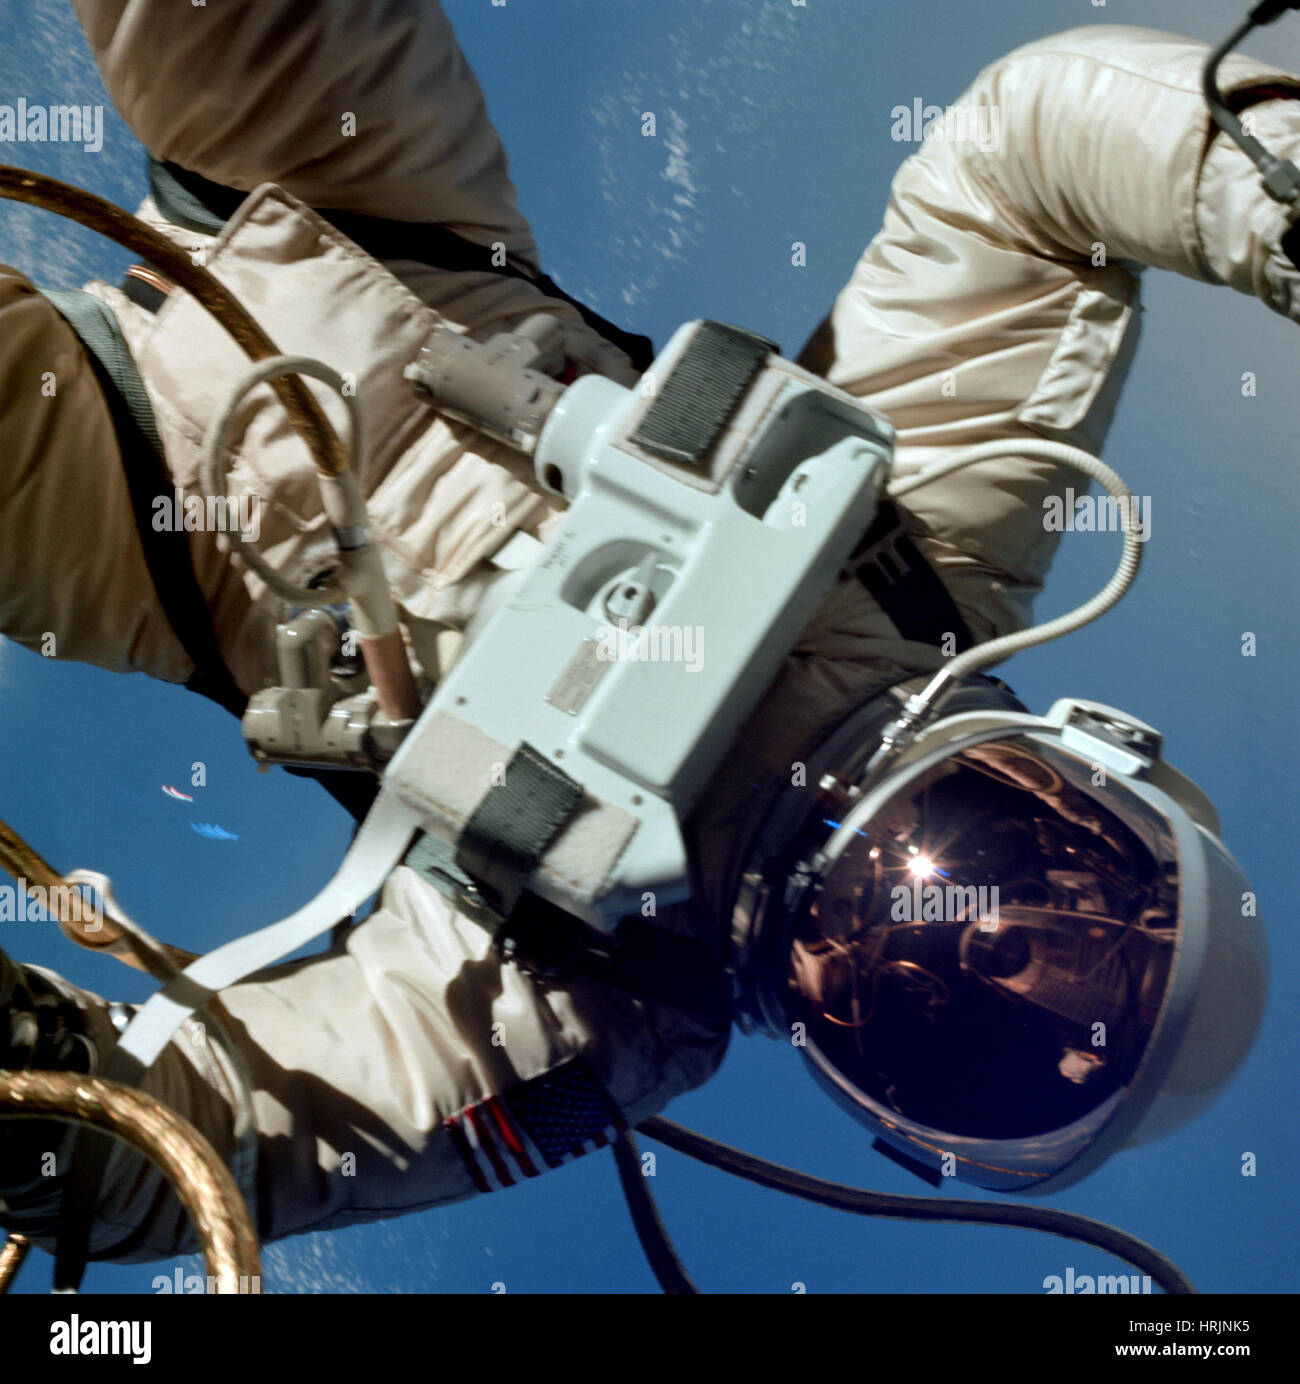 First American Spacewalk, Astronaut Ed White, 1965 Stock Photo